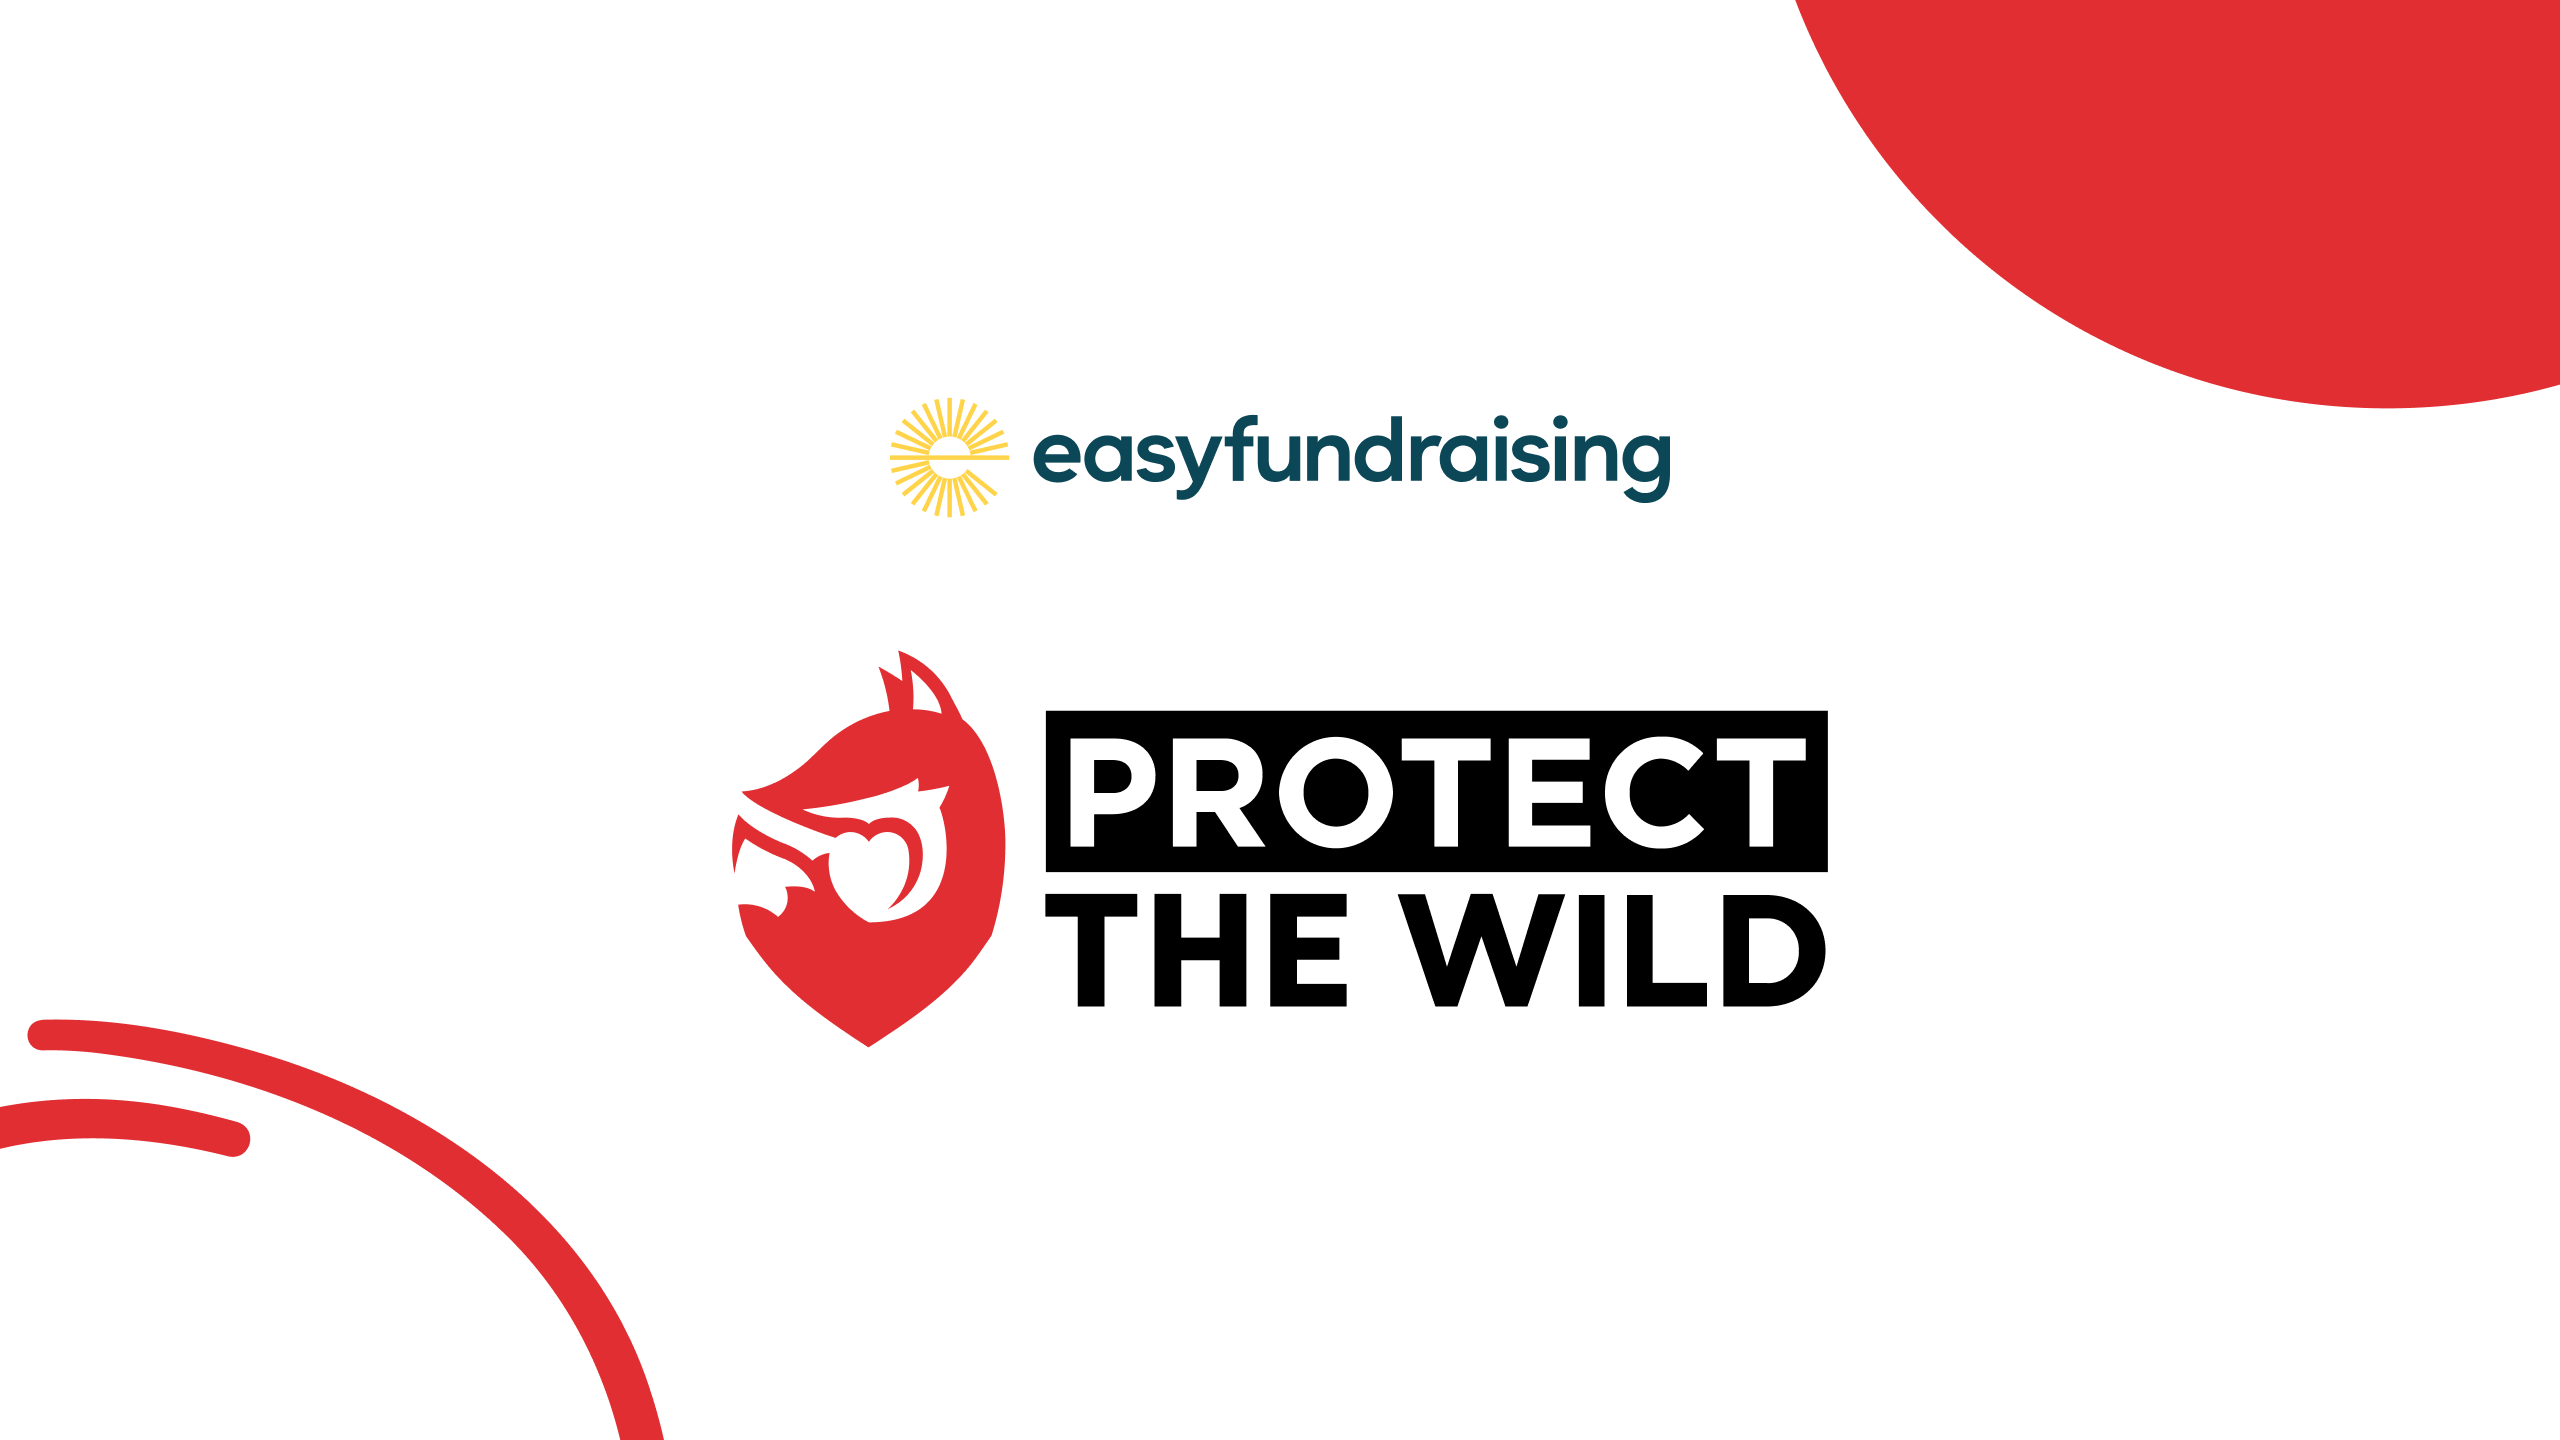 How easyfundraising works